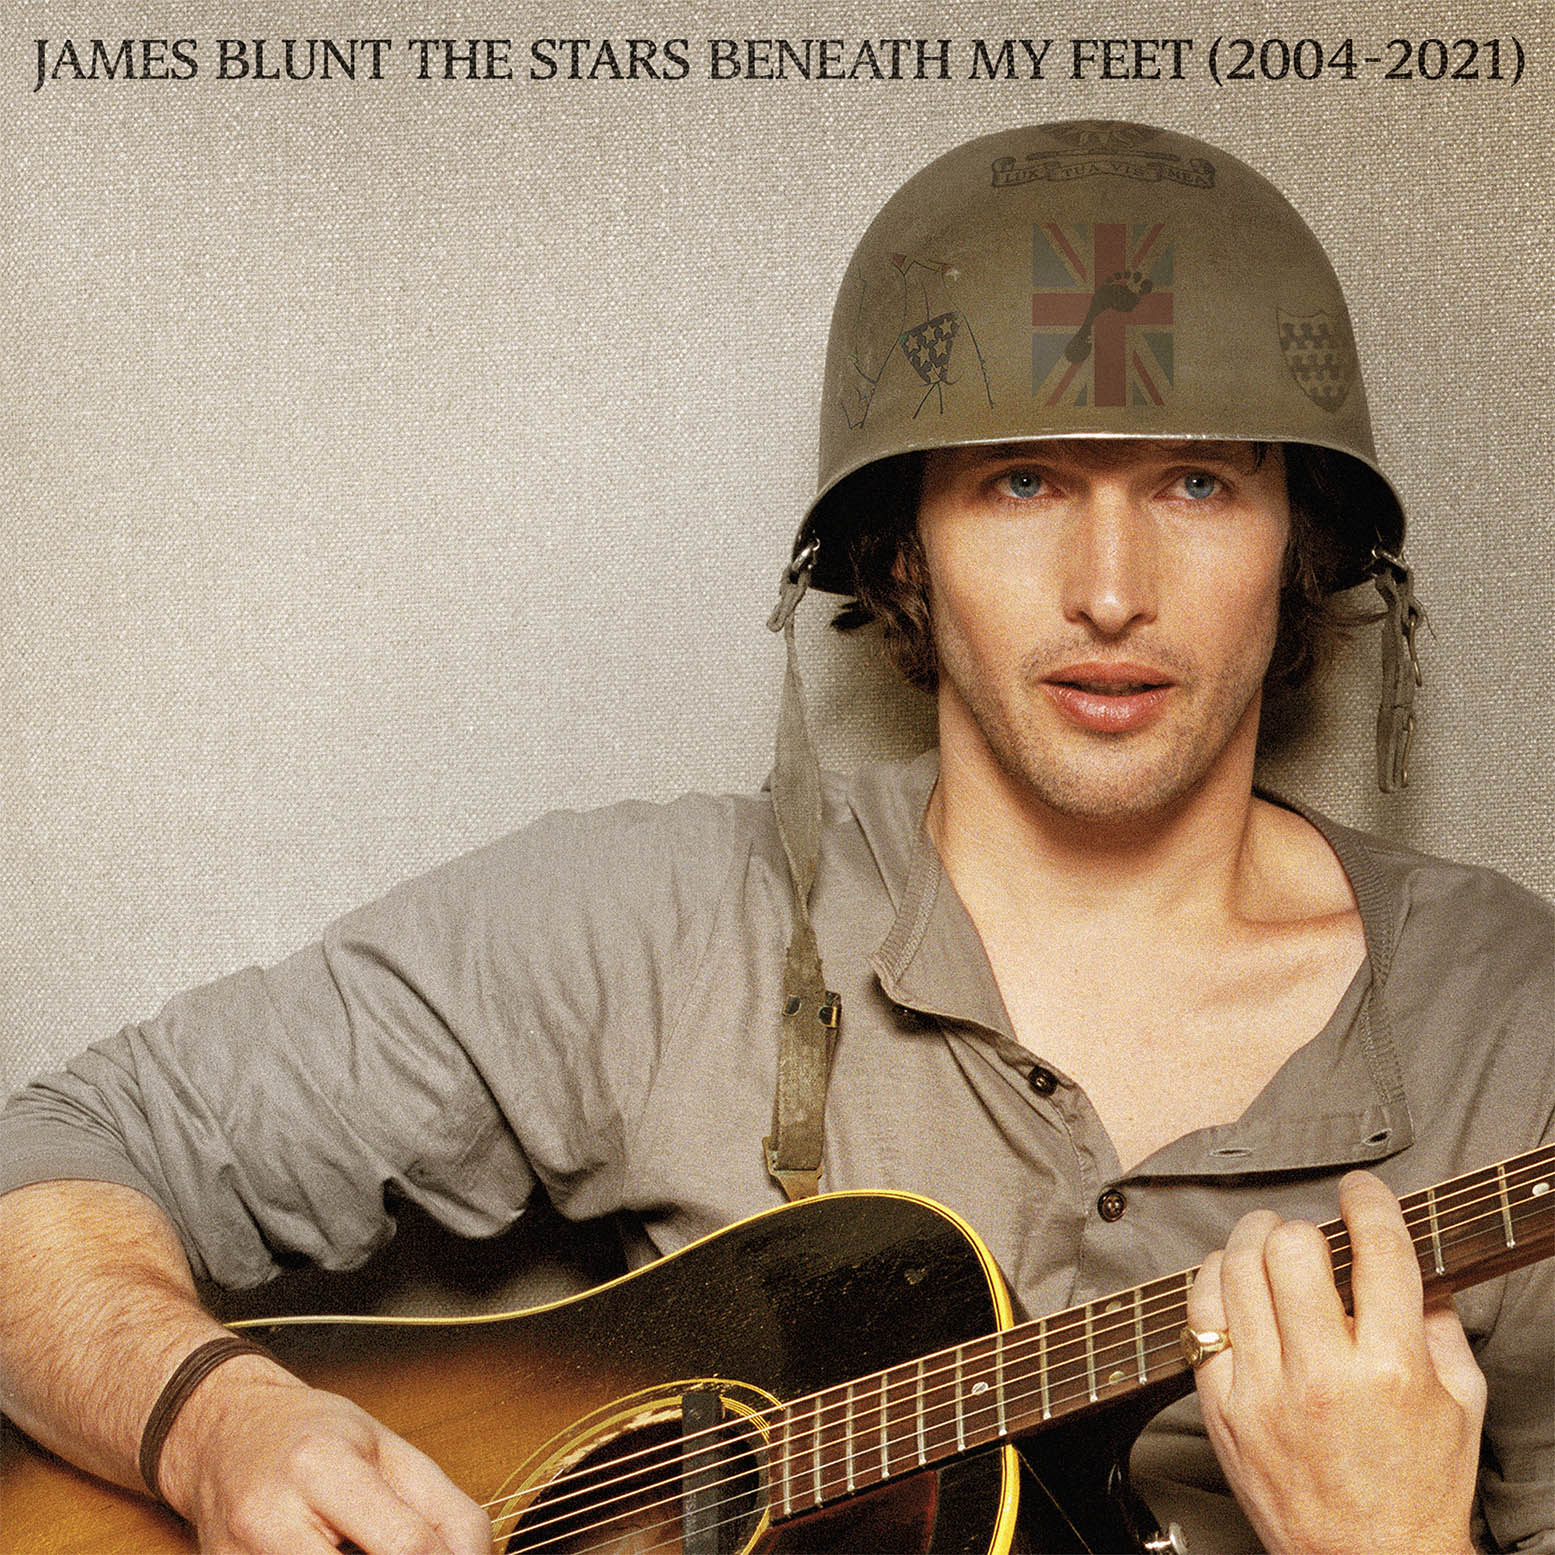 JAMES BLUNT ANNOUNCES GREATEST HITS ALBUM –  ‘THE STARS BENEATH MY FEET (2004 – 2021)